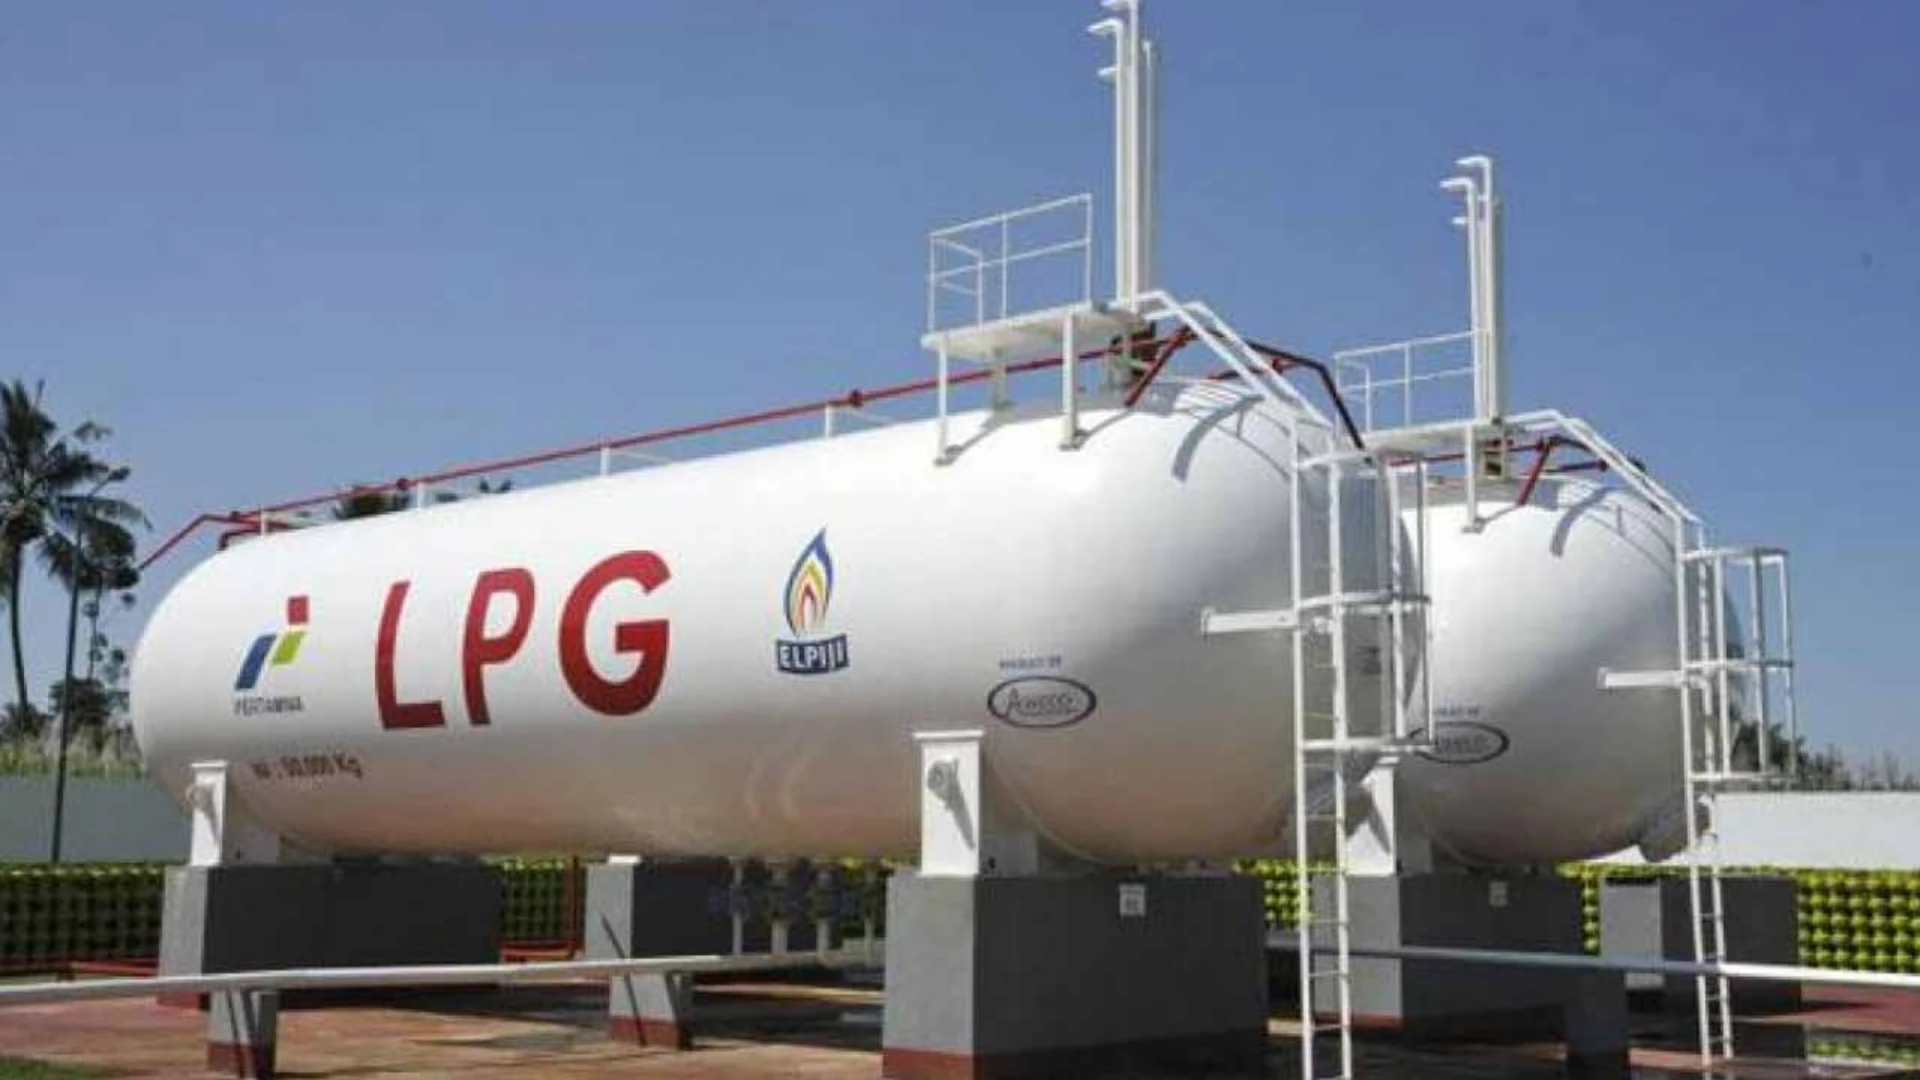 Major Suppliers of LPG gas in Pakistan